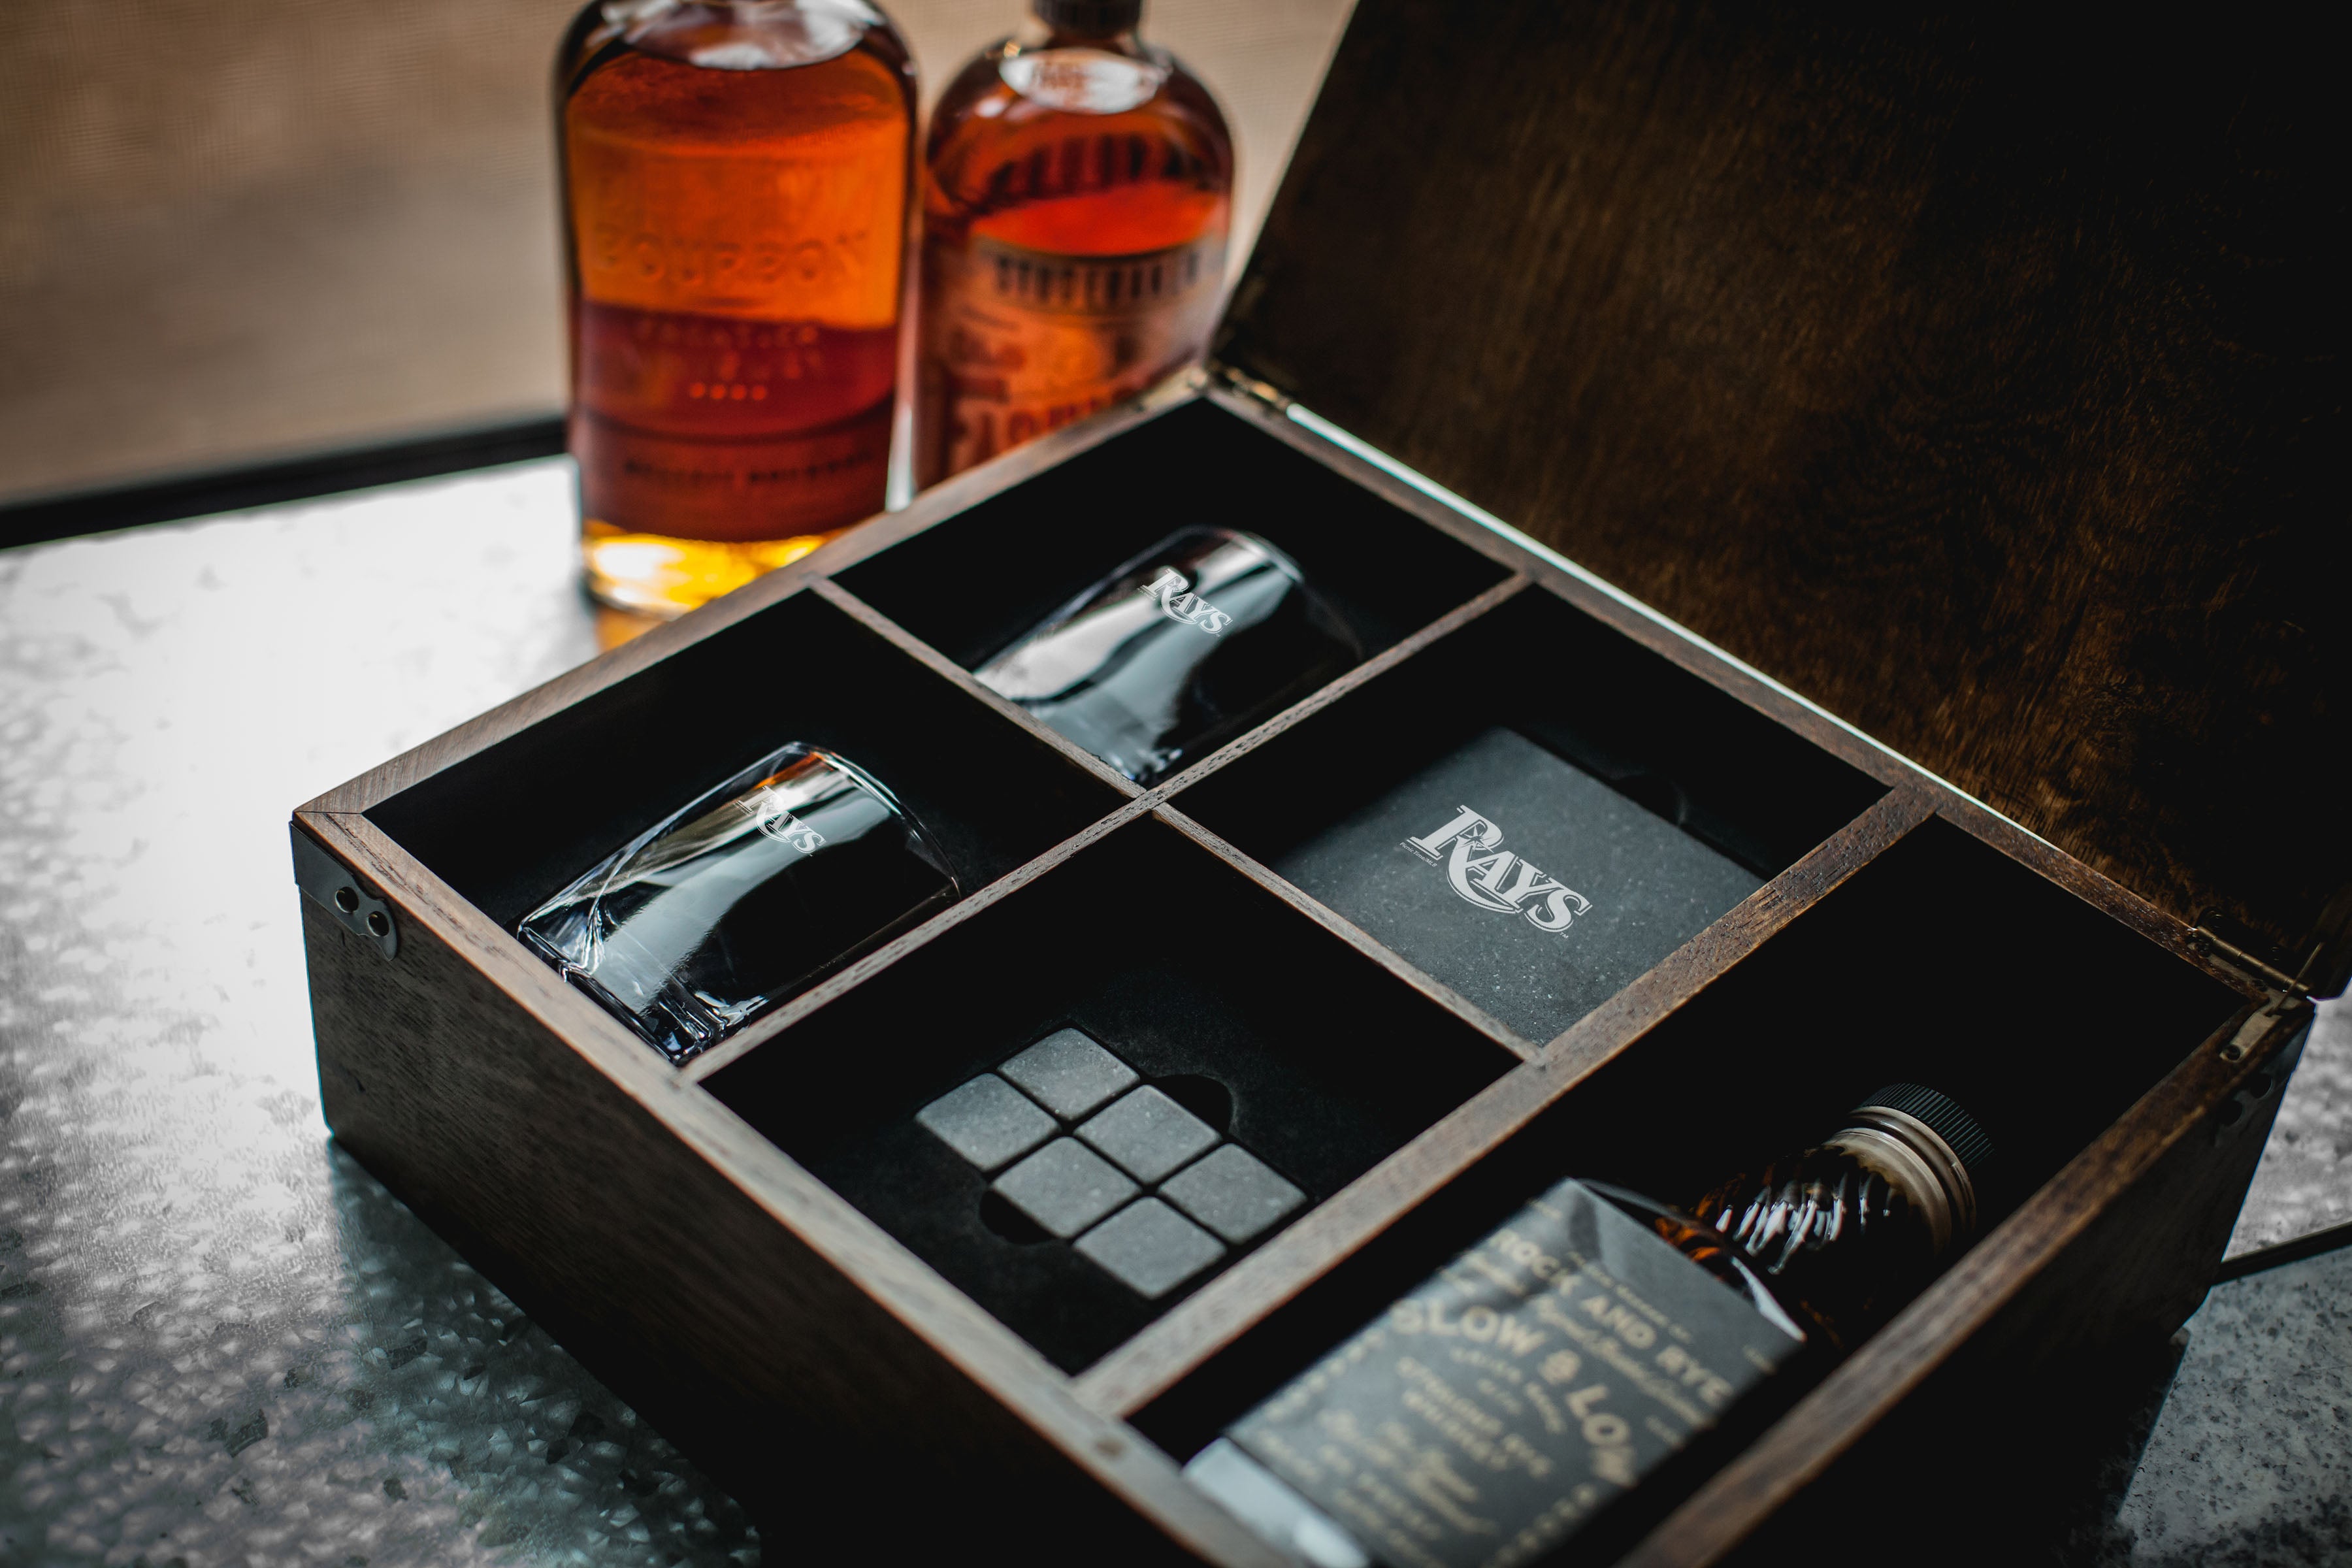 Tampa Bay Rays - Whiskey Box Gift Set